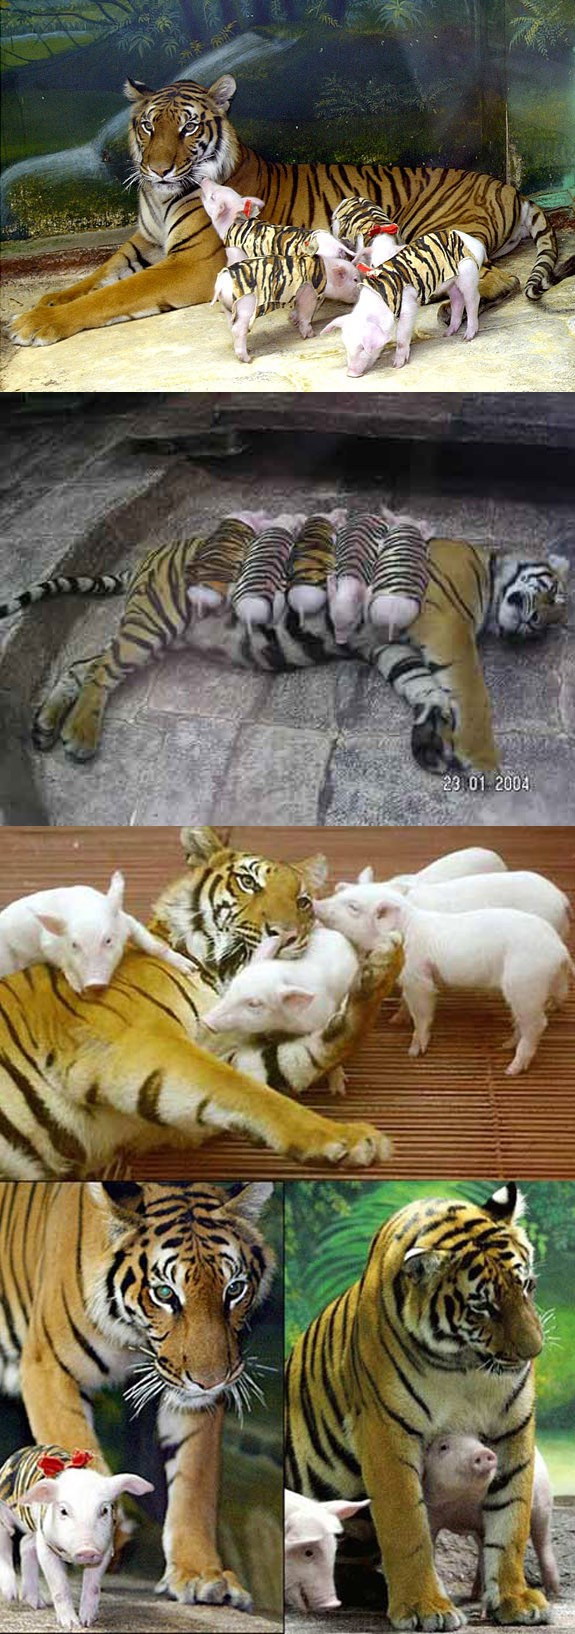 Tiger vs. piglets